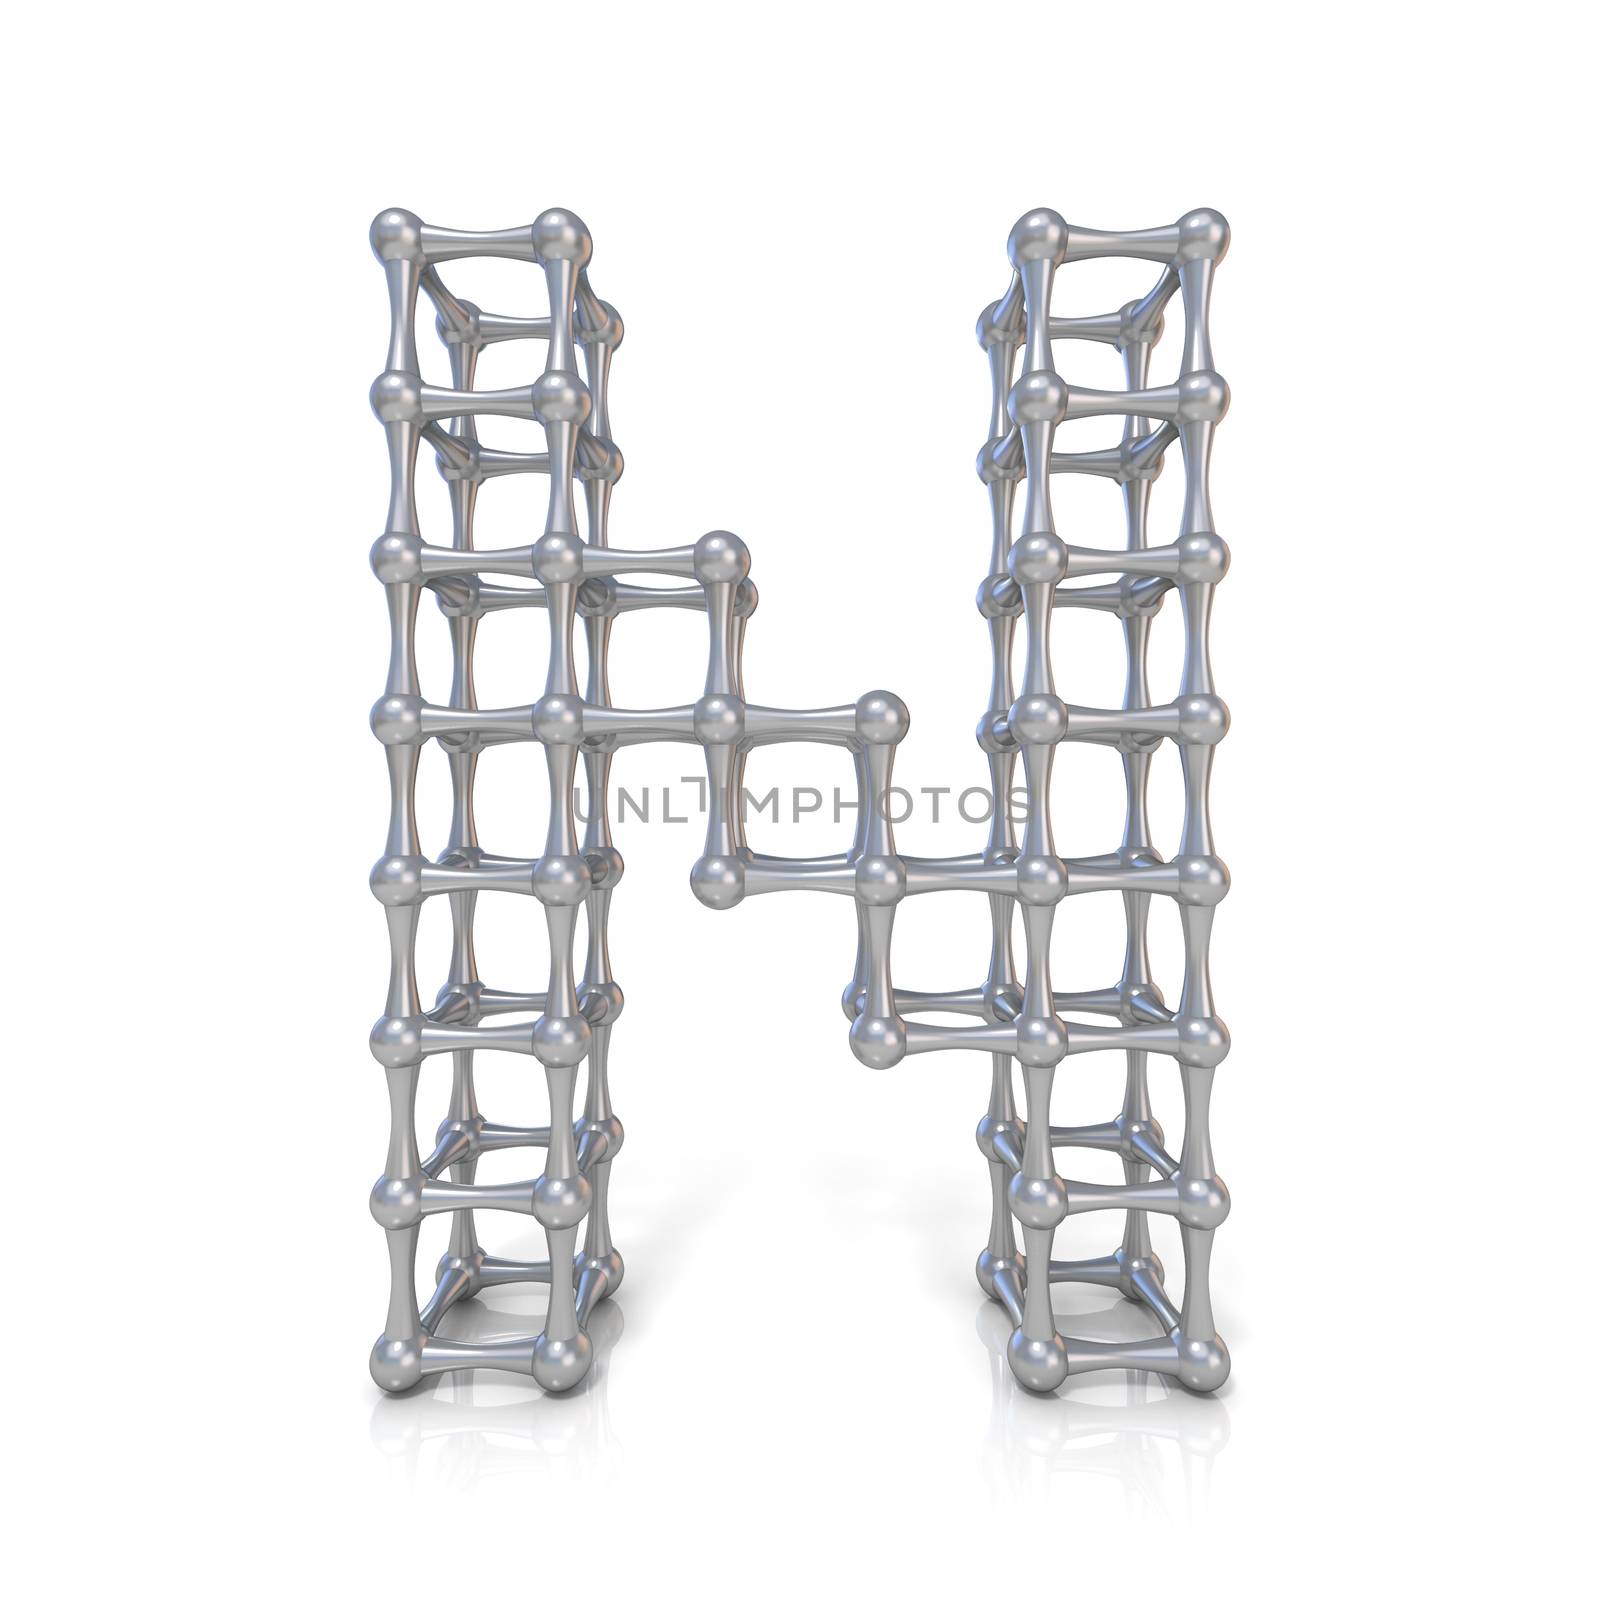 Metal lattice font letter N 3D render illustration isolated on white background